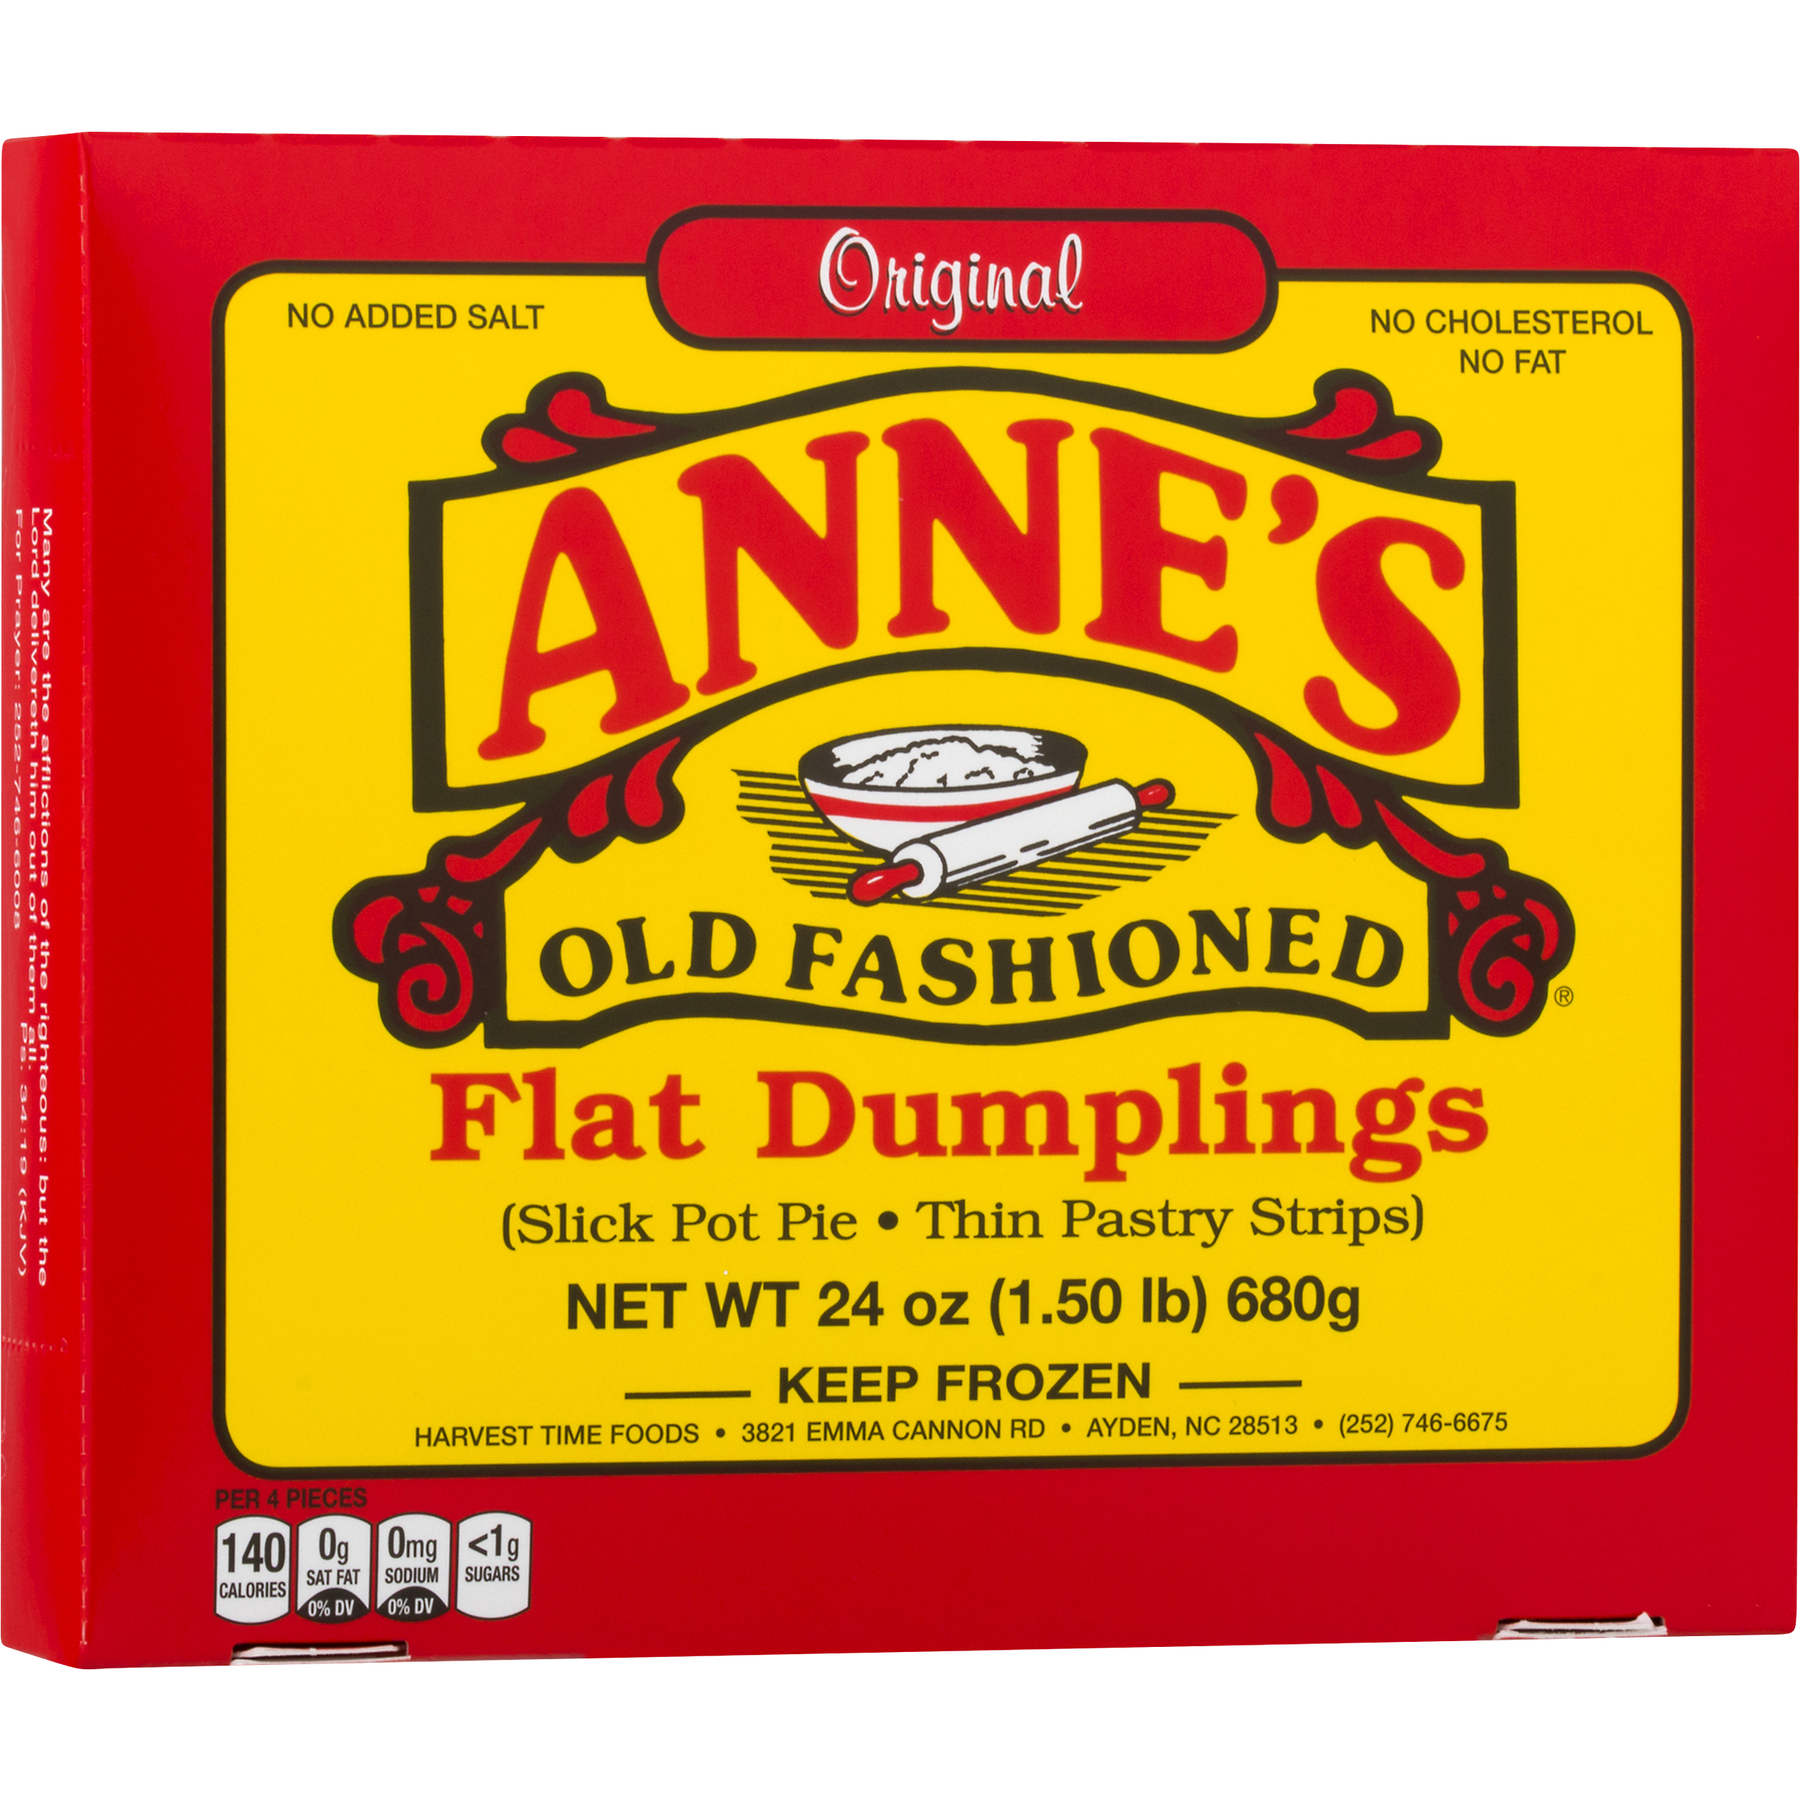 Anne's Flat Dumplings Old Fashioned, Box, 24.0 oz - image 2 of 7